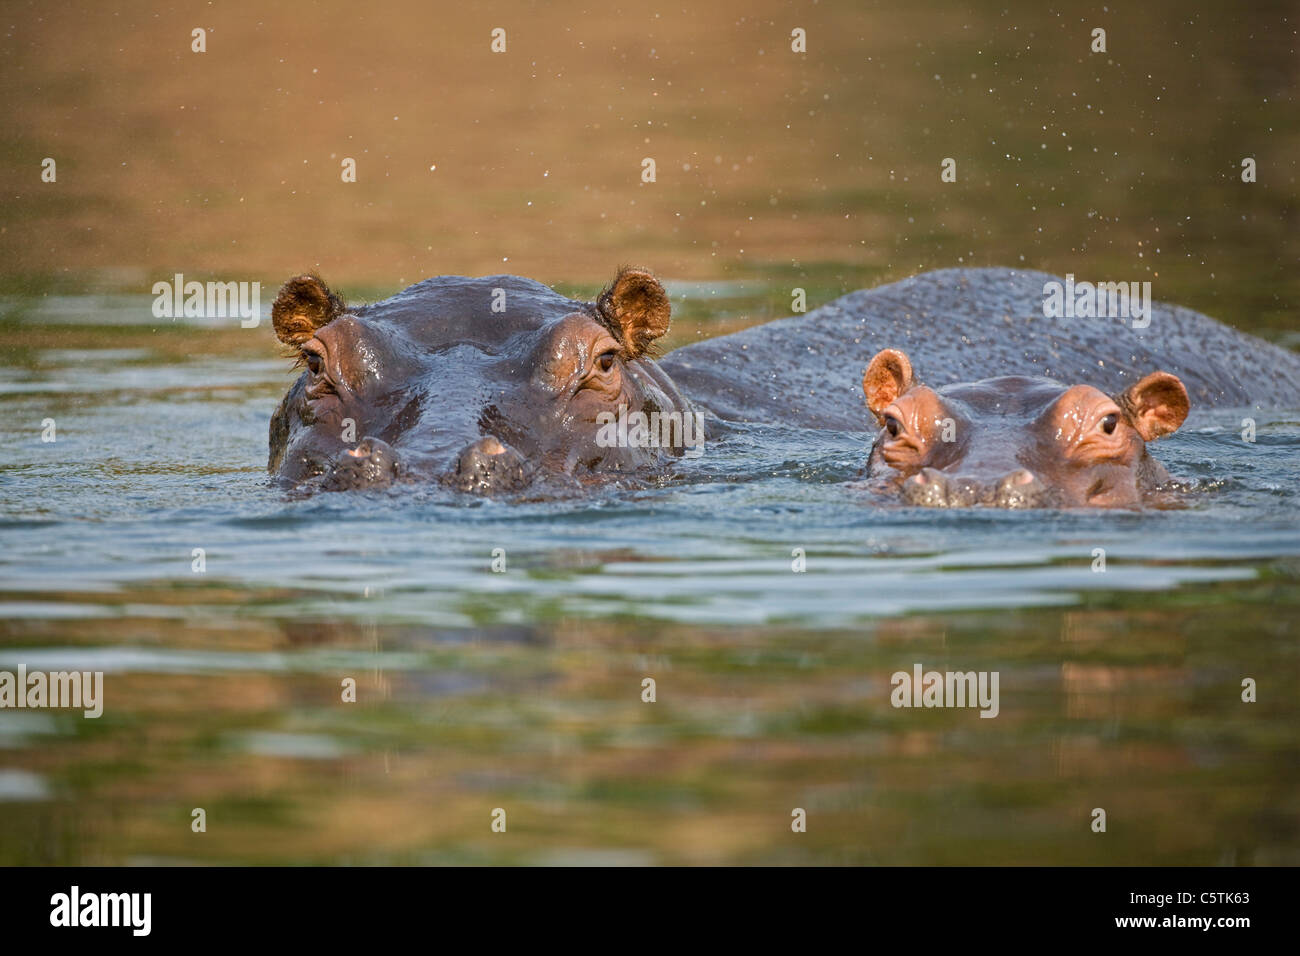 Africa, Botswana, Hippopotami (Hippopotamus amphibius) in water Stock Photo